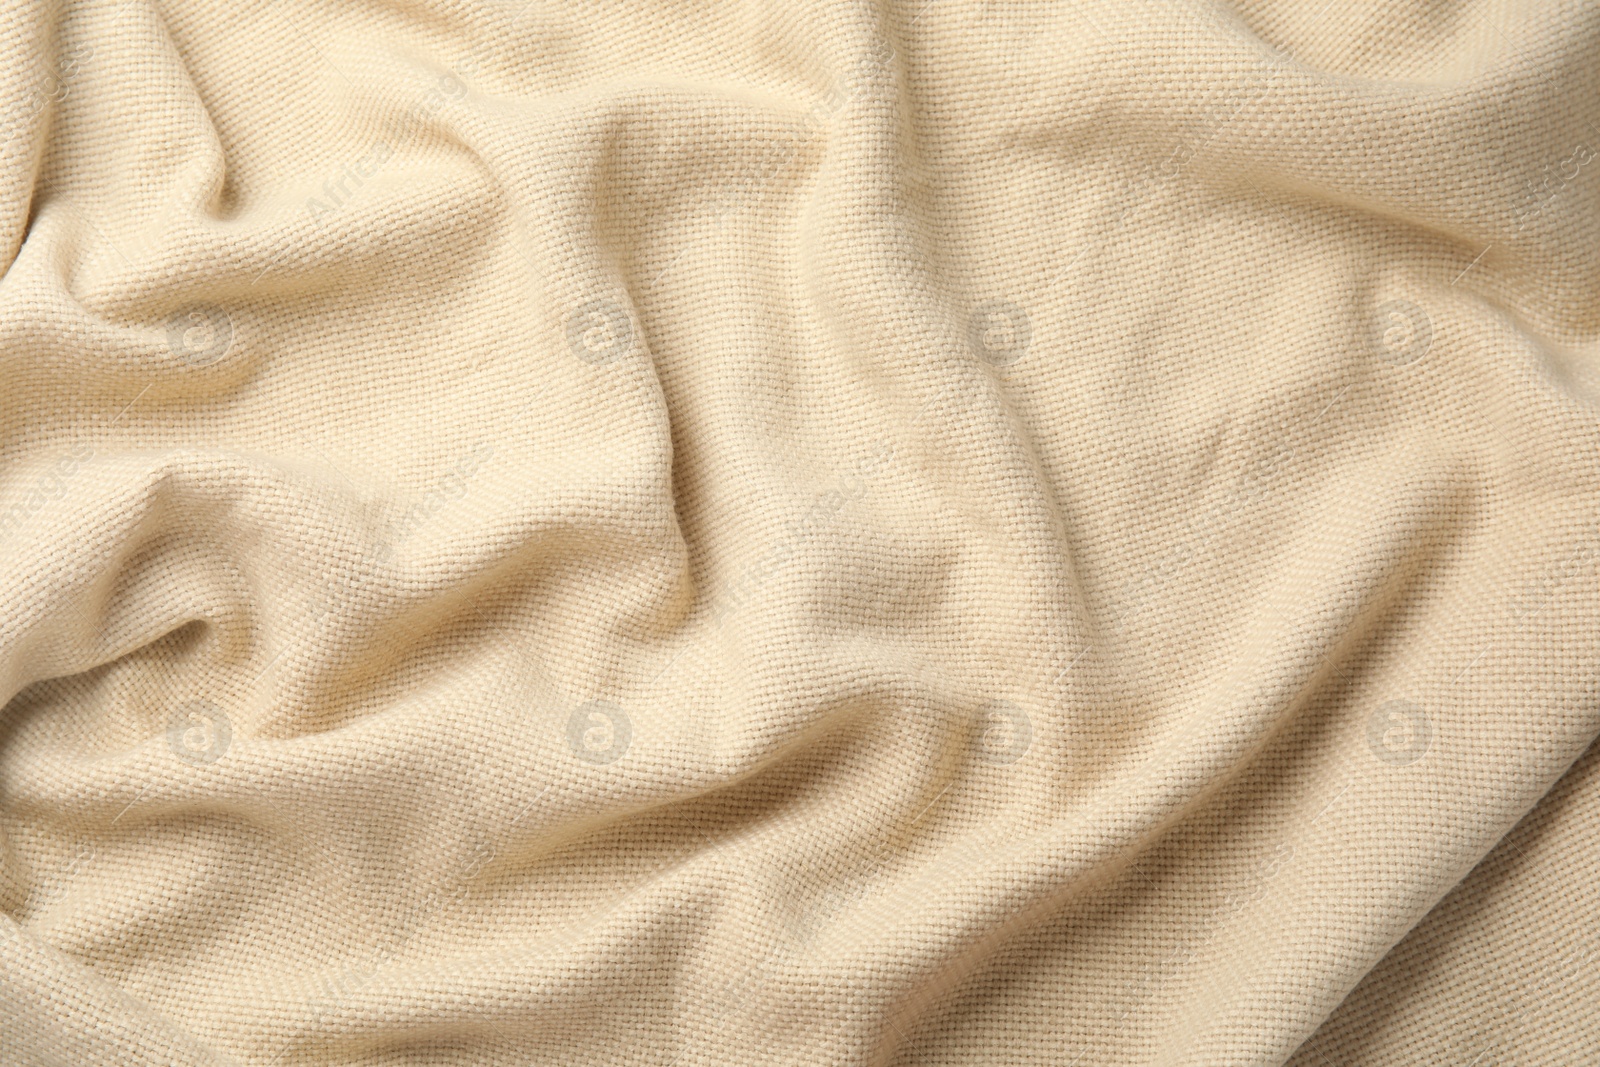 Photo of Soft warm beige plaid as background, closeup